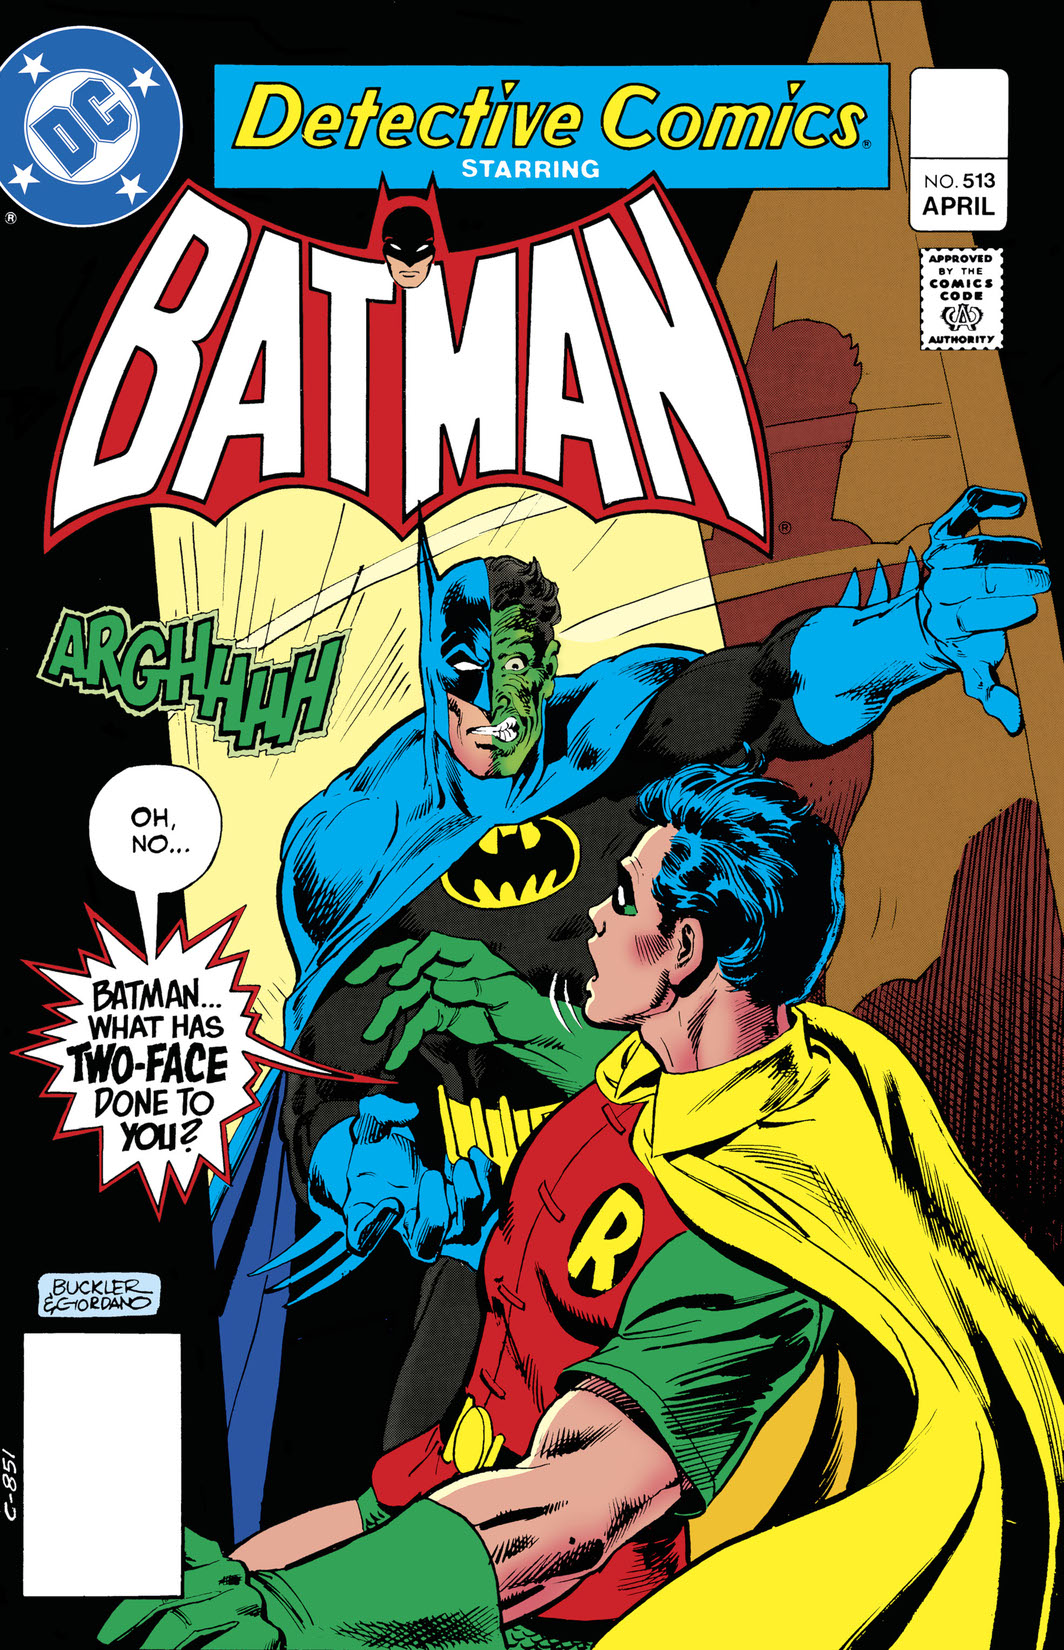 Detective Comics (1937-) #513 preview images